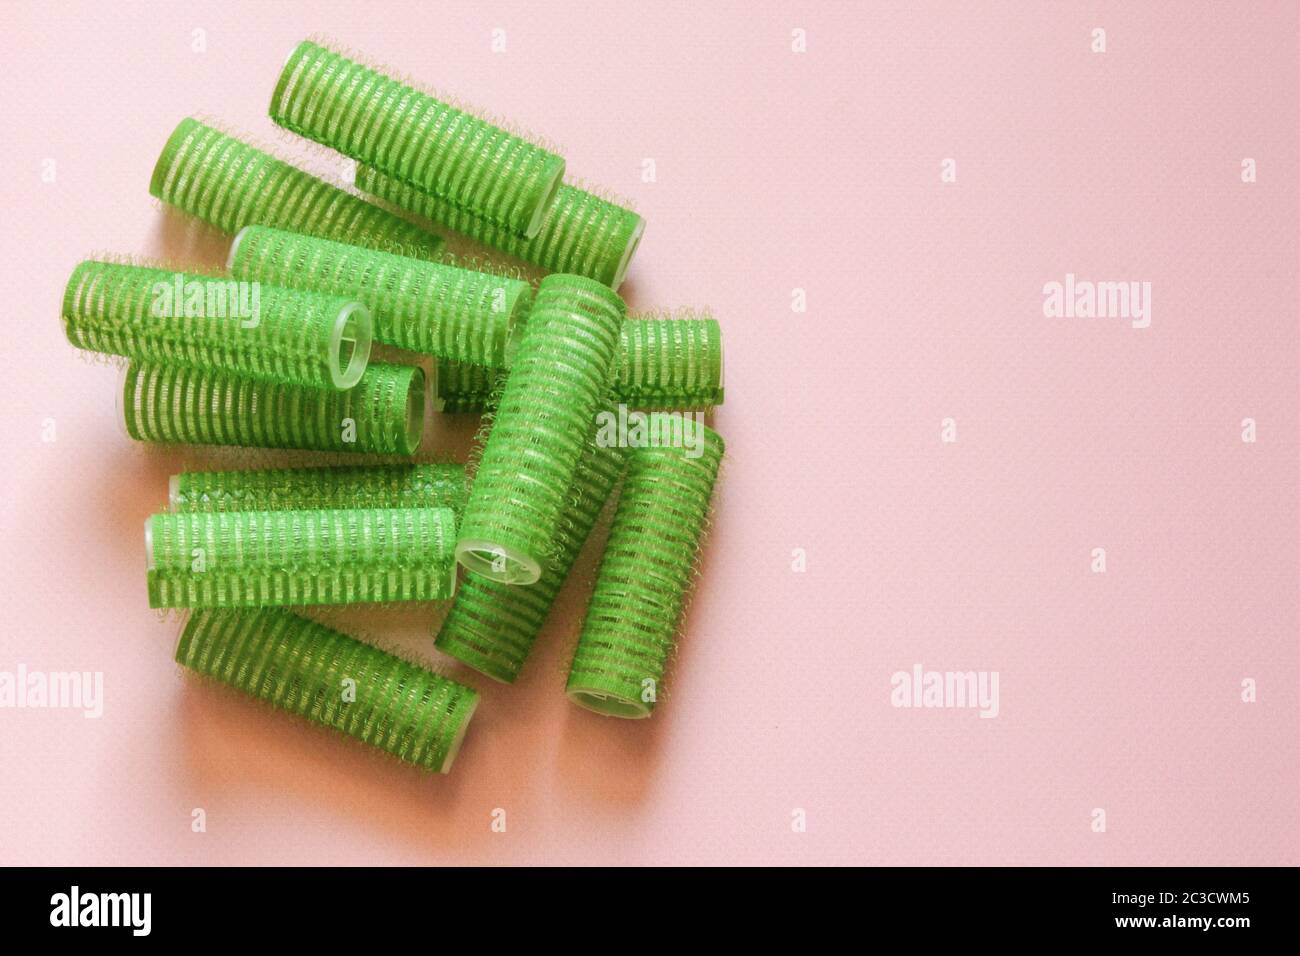 Culatori per capelli sul dorso rosa. Culer verdi per i capelli. Foto Stock